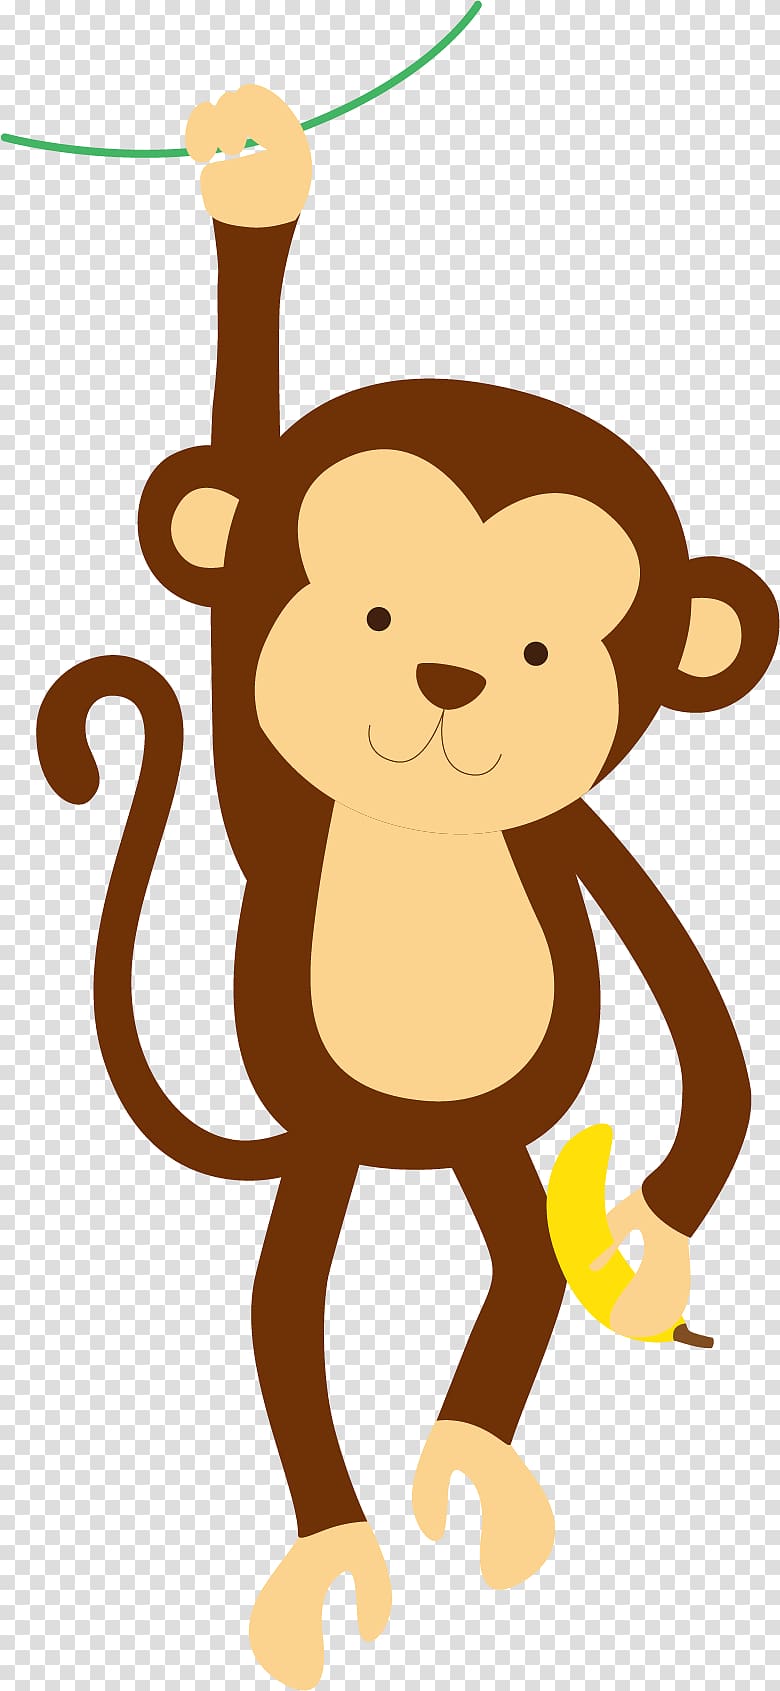 Brown monkey illustration, Giraffe Pony Monkey Cuteness.